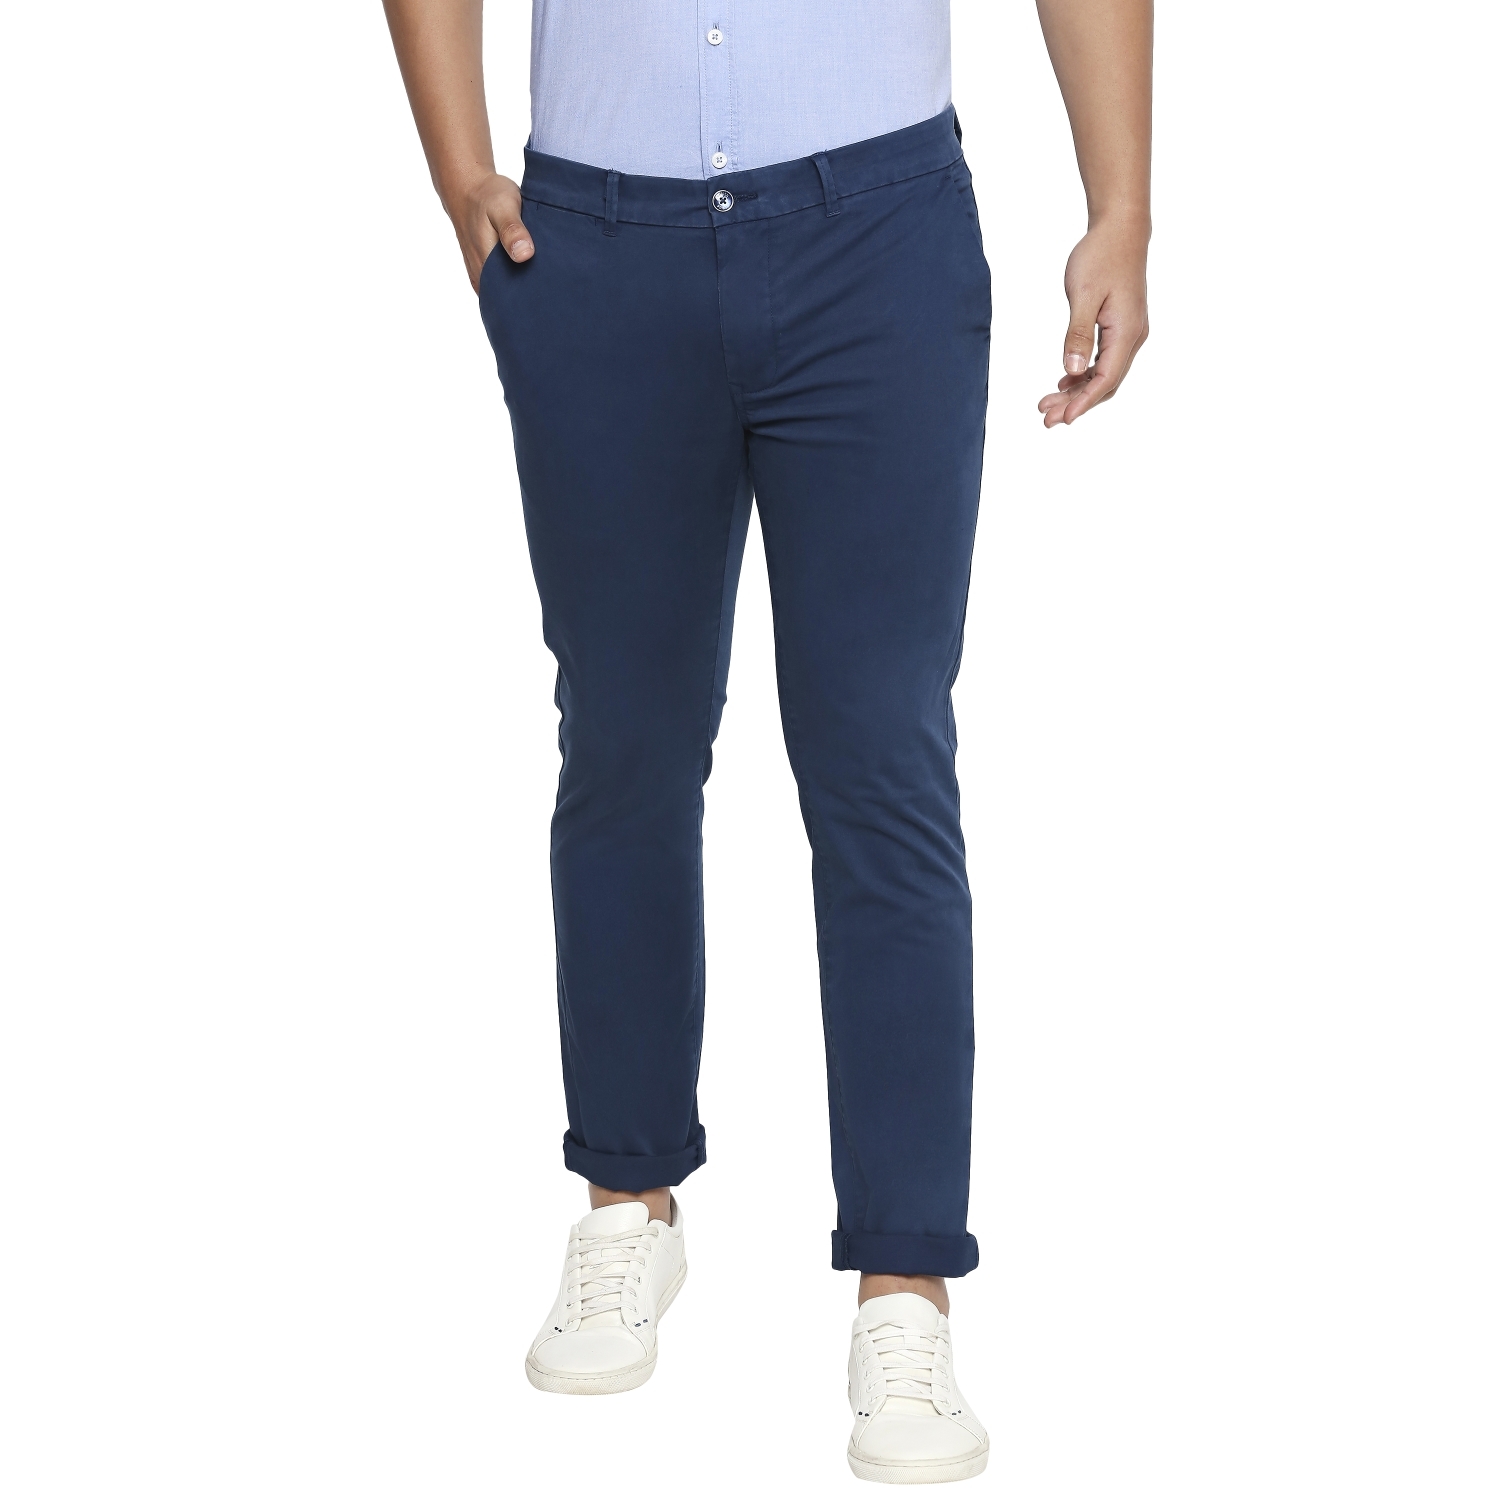 Basics | Basics Tapered Fit Legion Blue Over Dyed Stretch Trouser